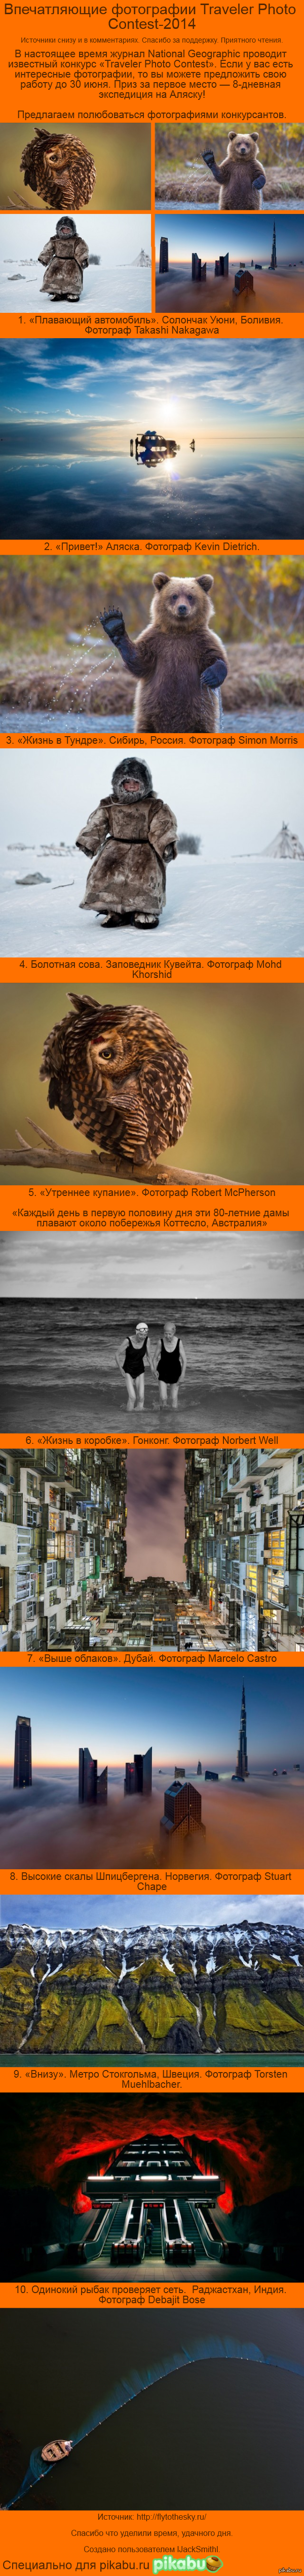   Traveler Photo Contest-2014     National Geographic    Traveler Photo Contest...